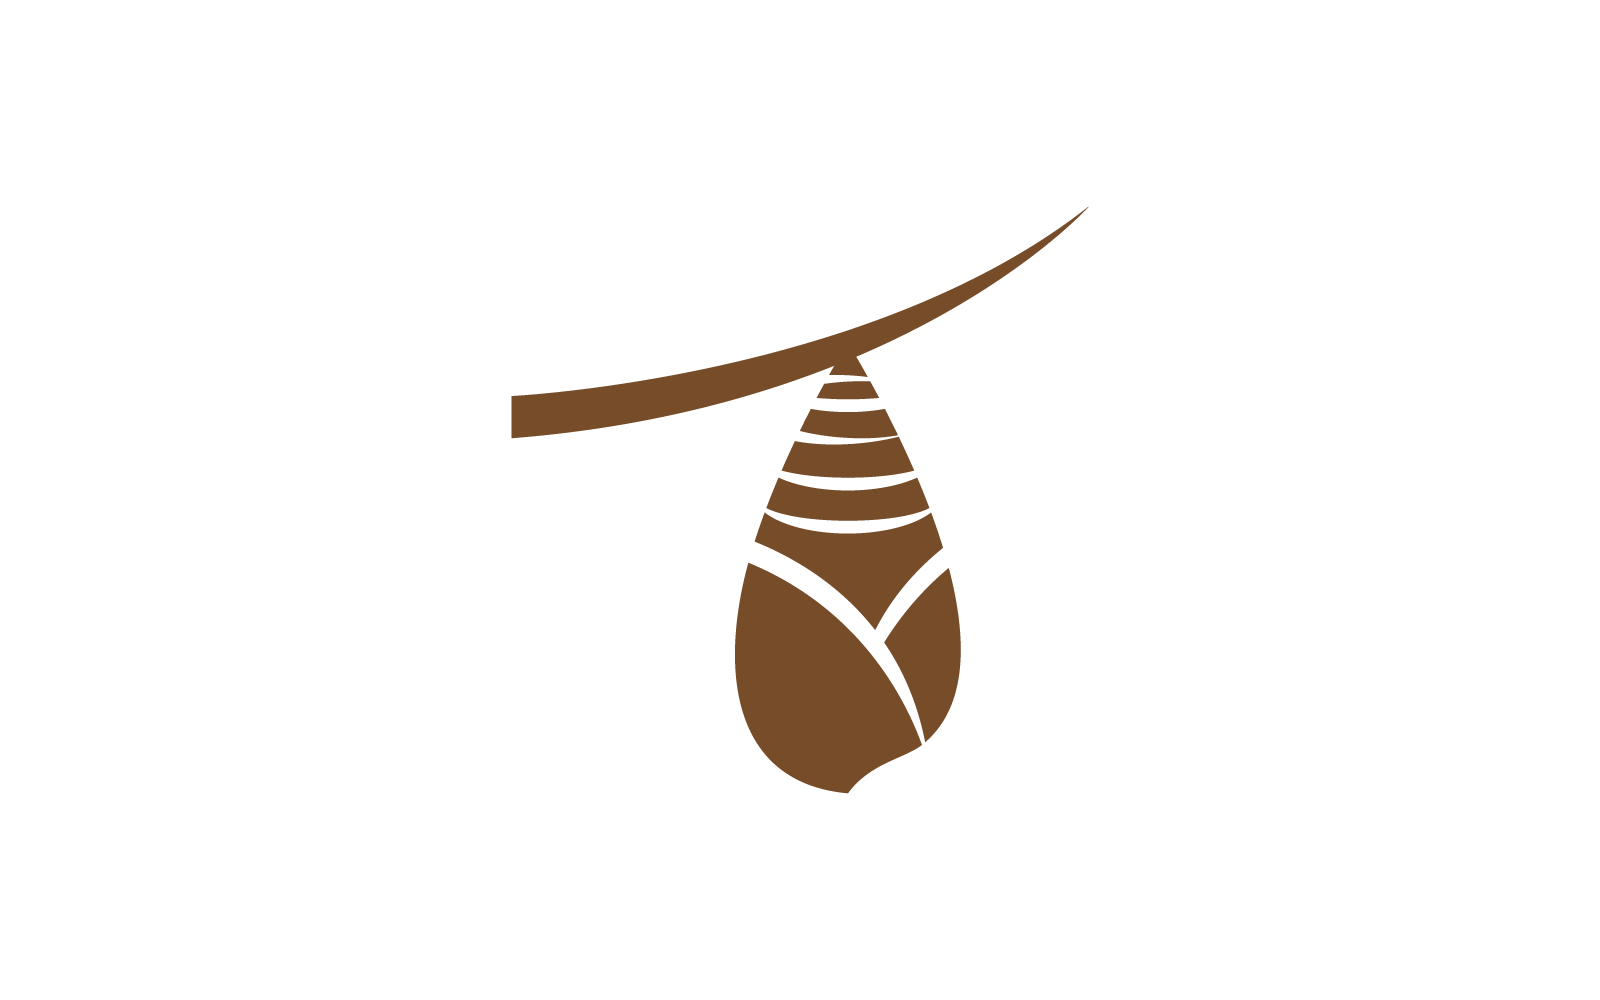 Brown Cocoon illustration logo vector design